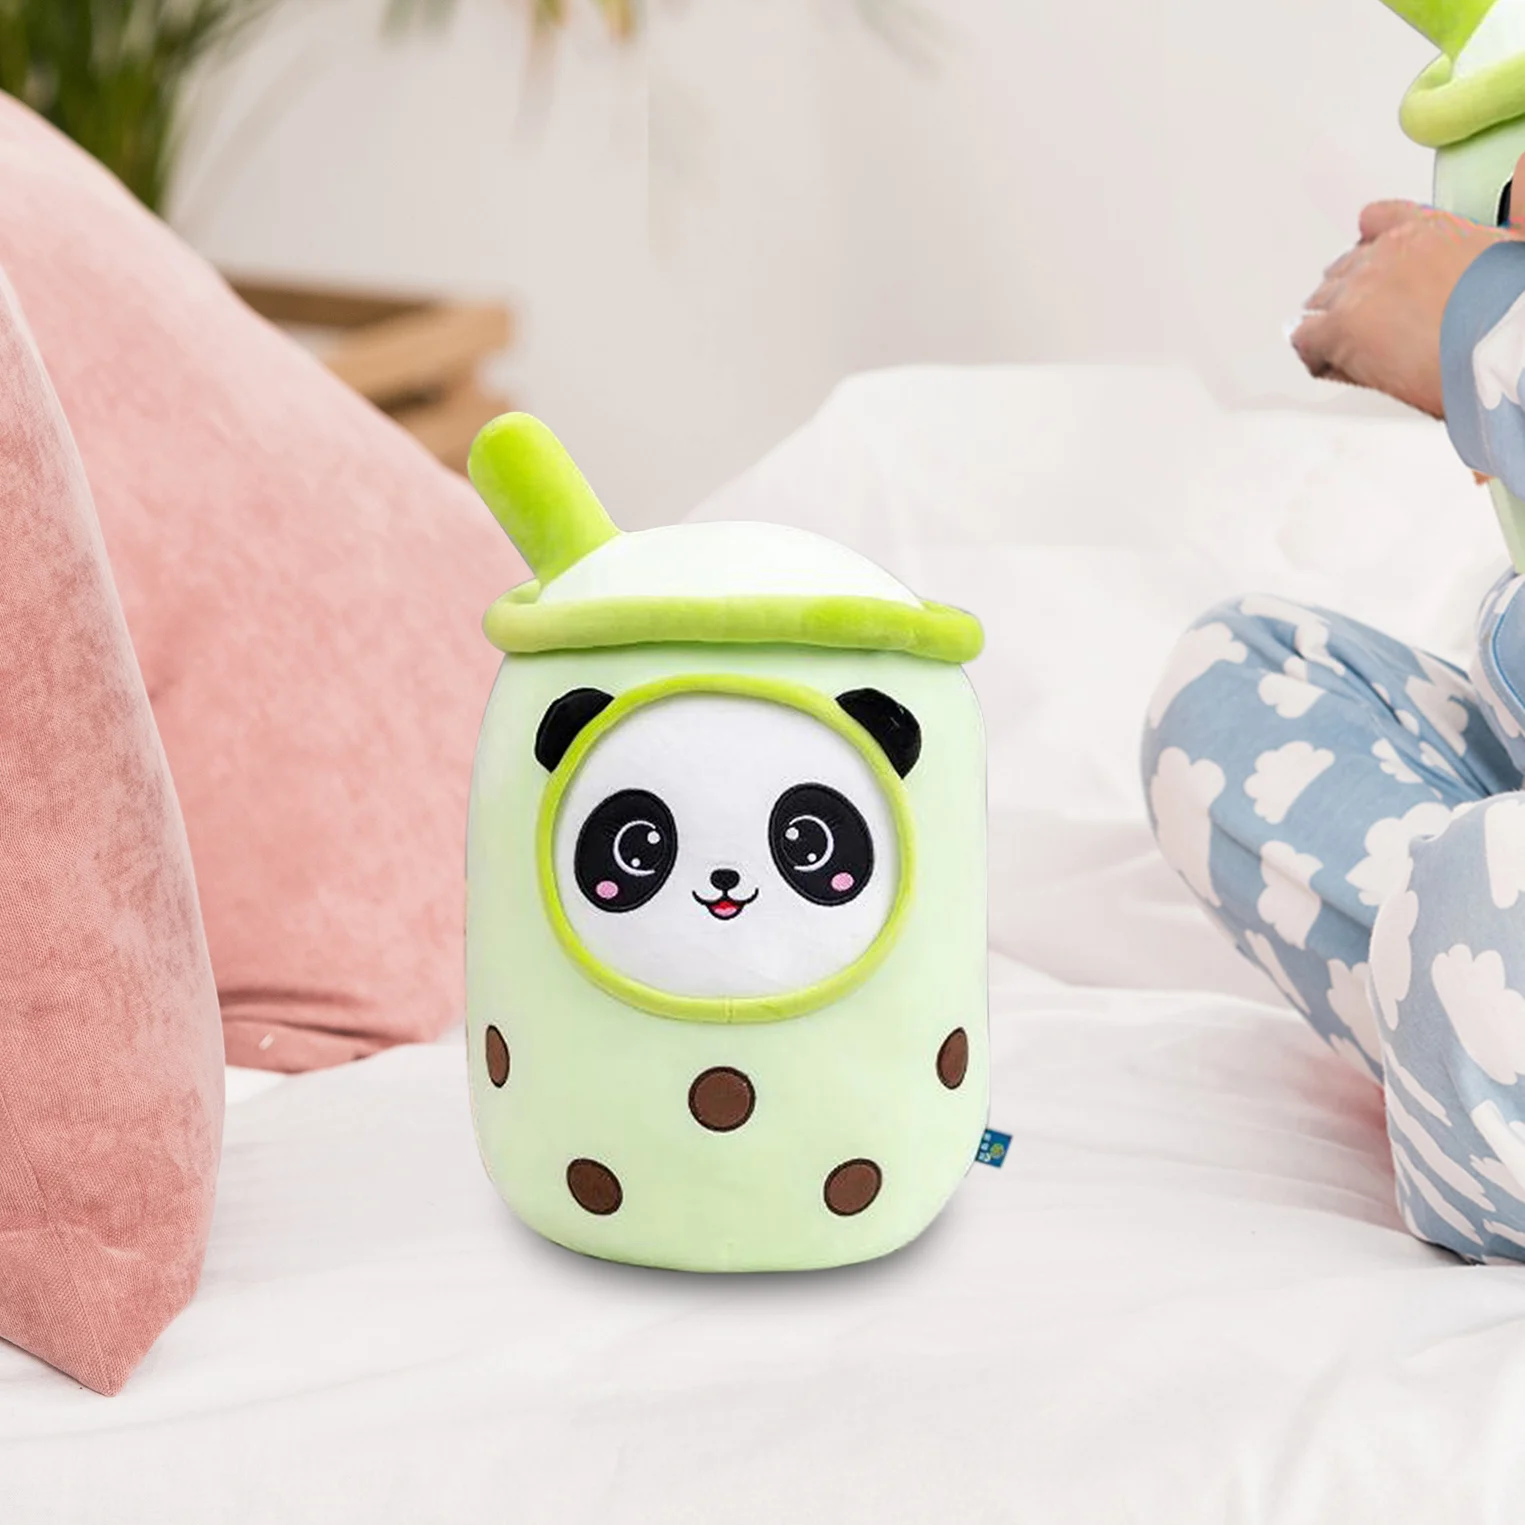 

Green Creams Teacup Pillow Cute Panda Expression Cushion Lumbar Cushion Home Bed Pillow Girl Bladder h Animal h Cover